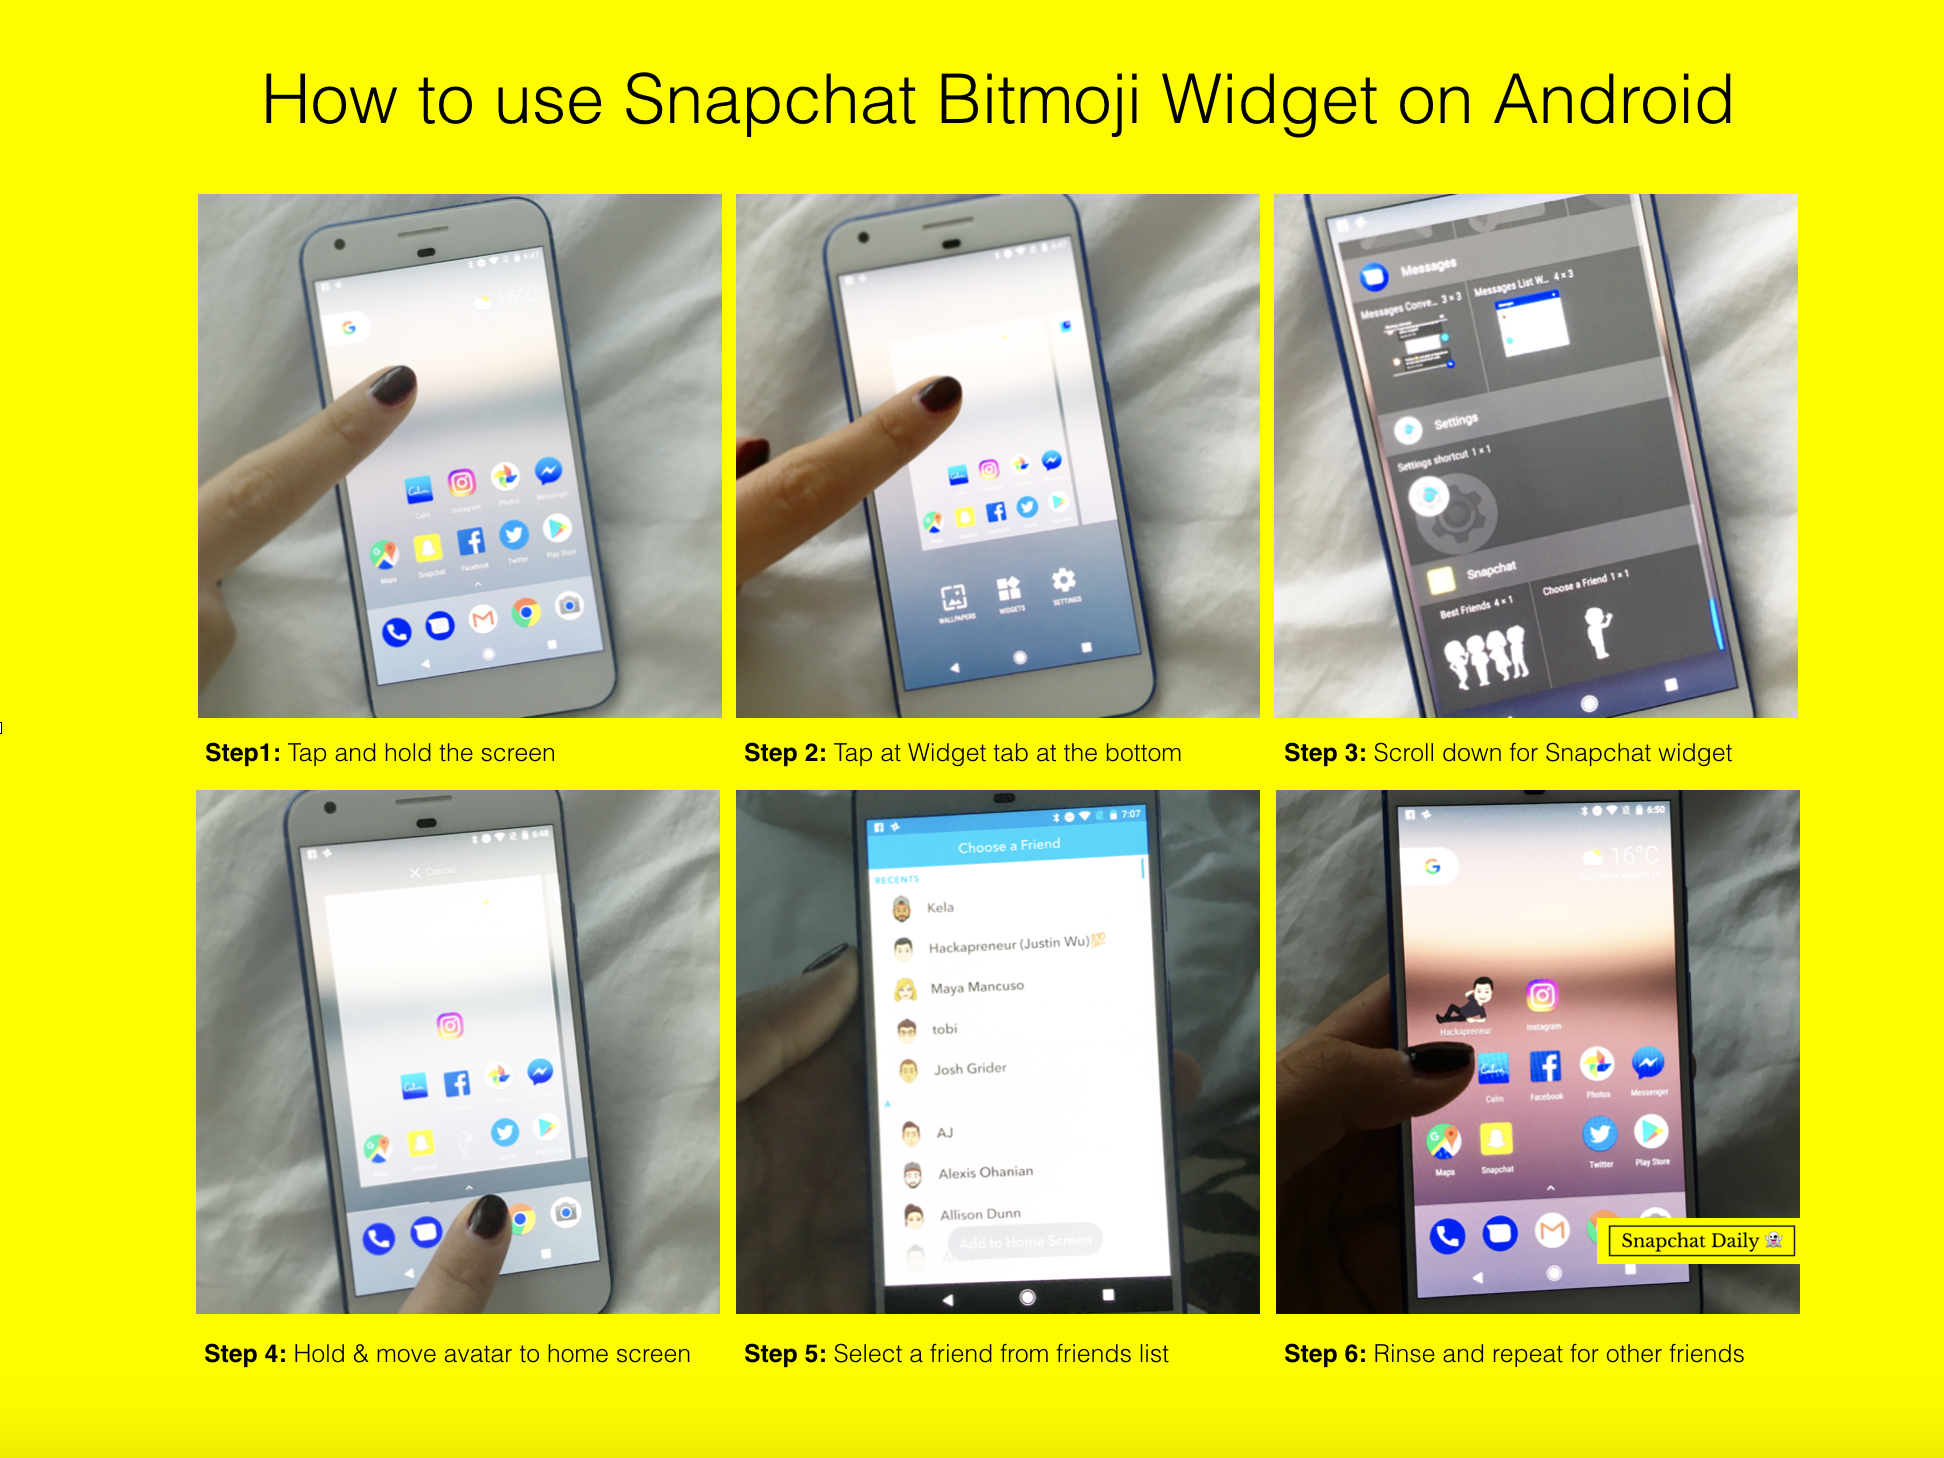 Snapchat Bitmoji widget